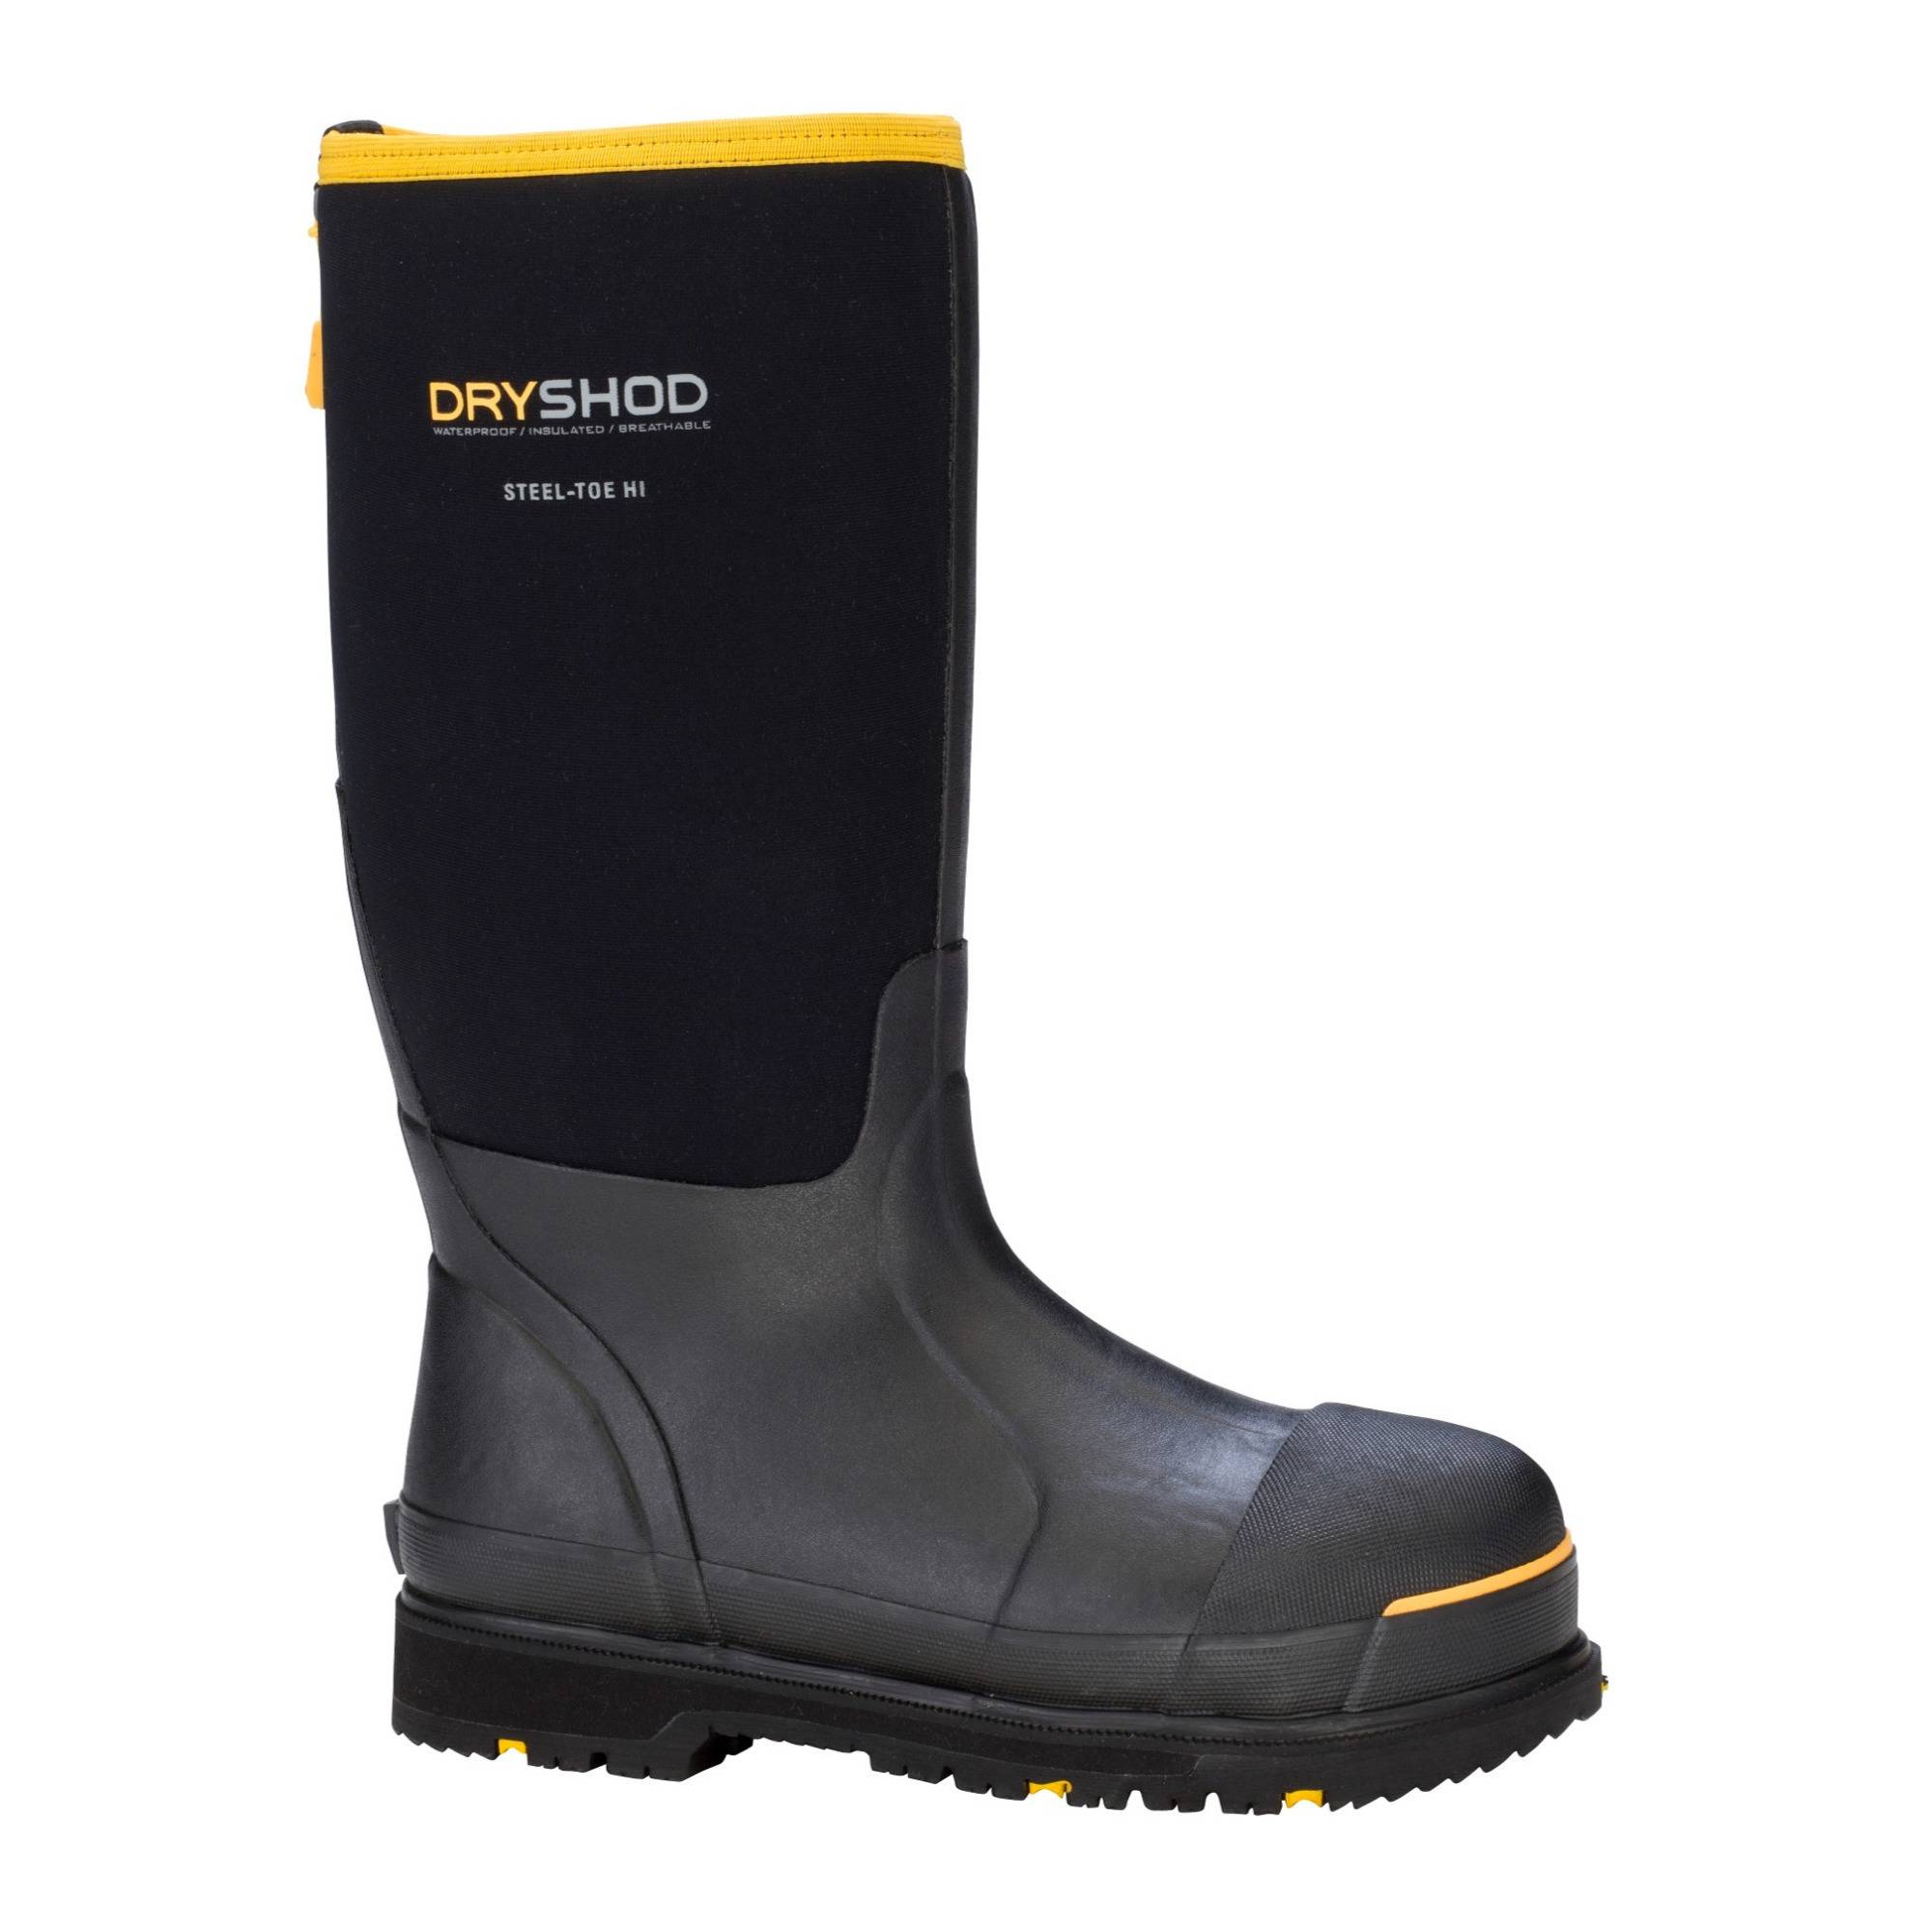 DryShod Steel-Toe Protective Work Boots (Size 13, Hi Cut, Black/Yellow)